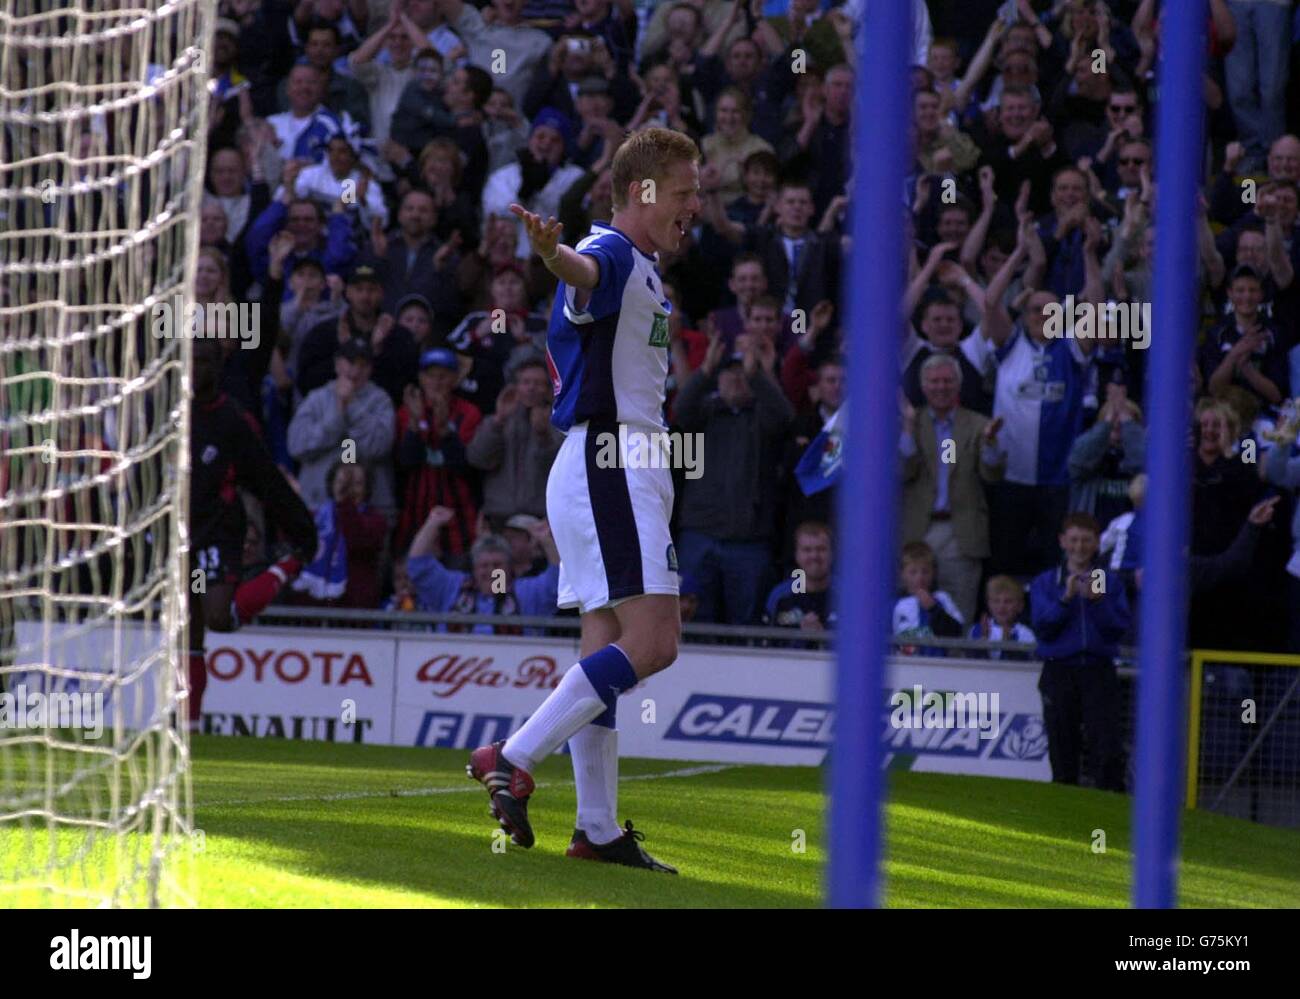 Blackburn's Damien Duff celebrates after scoring his 2nd goal during the FA Barclaycard Premiership game at Ewood Park, Blackburn. Stock Photo